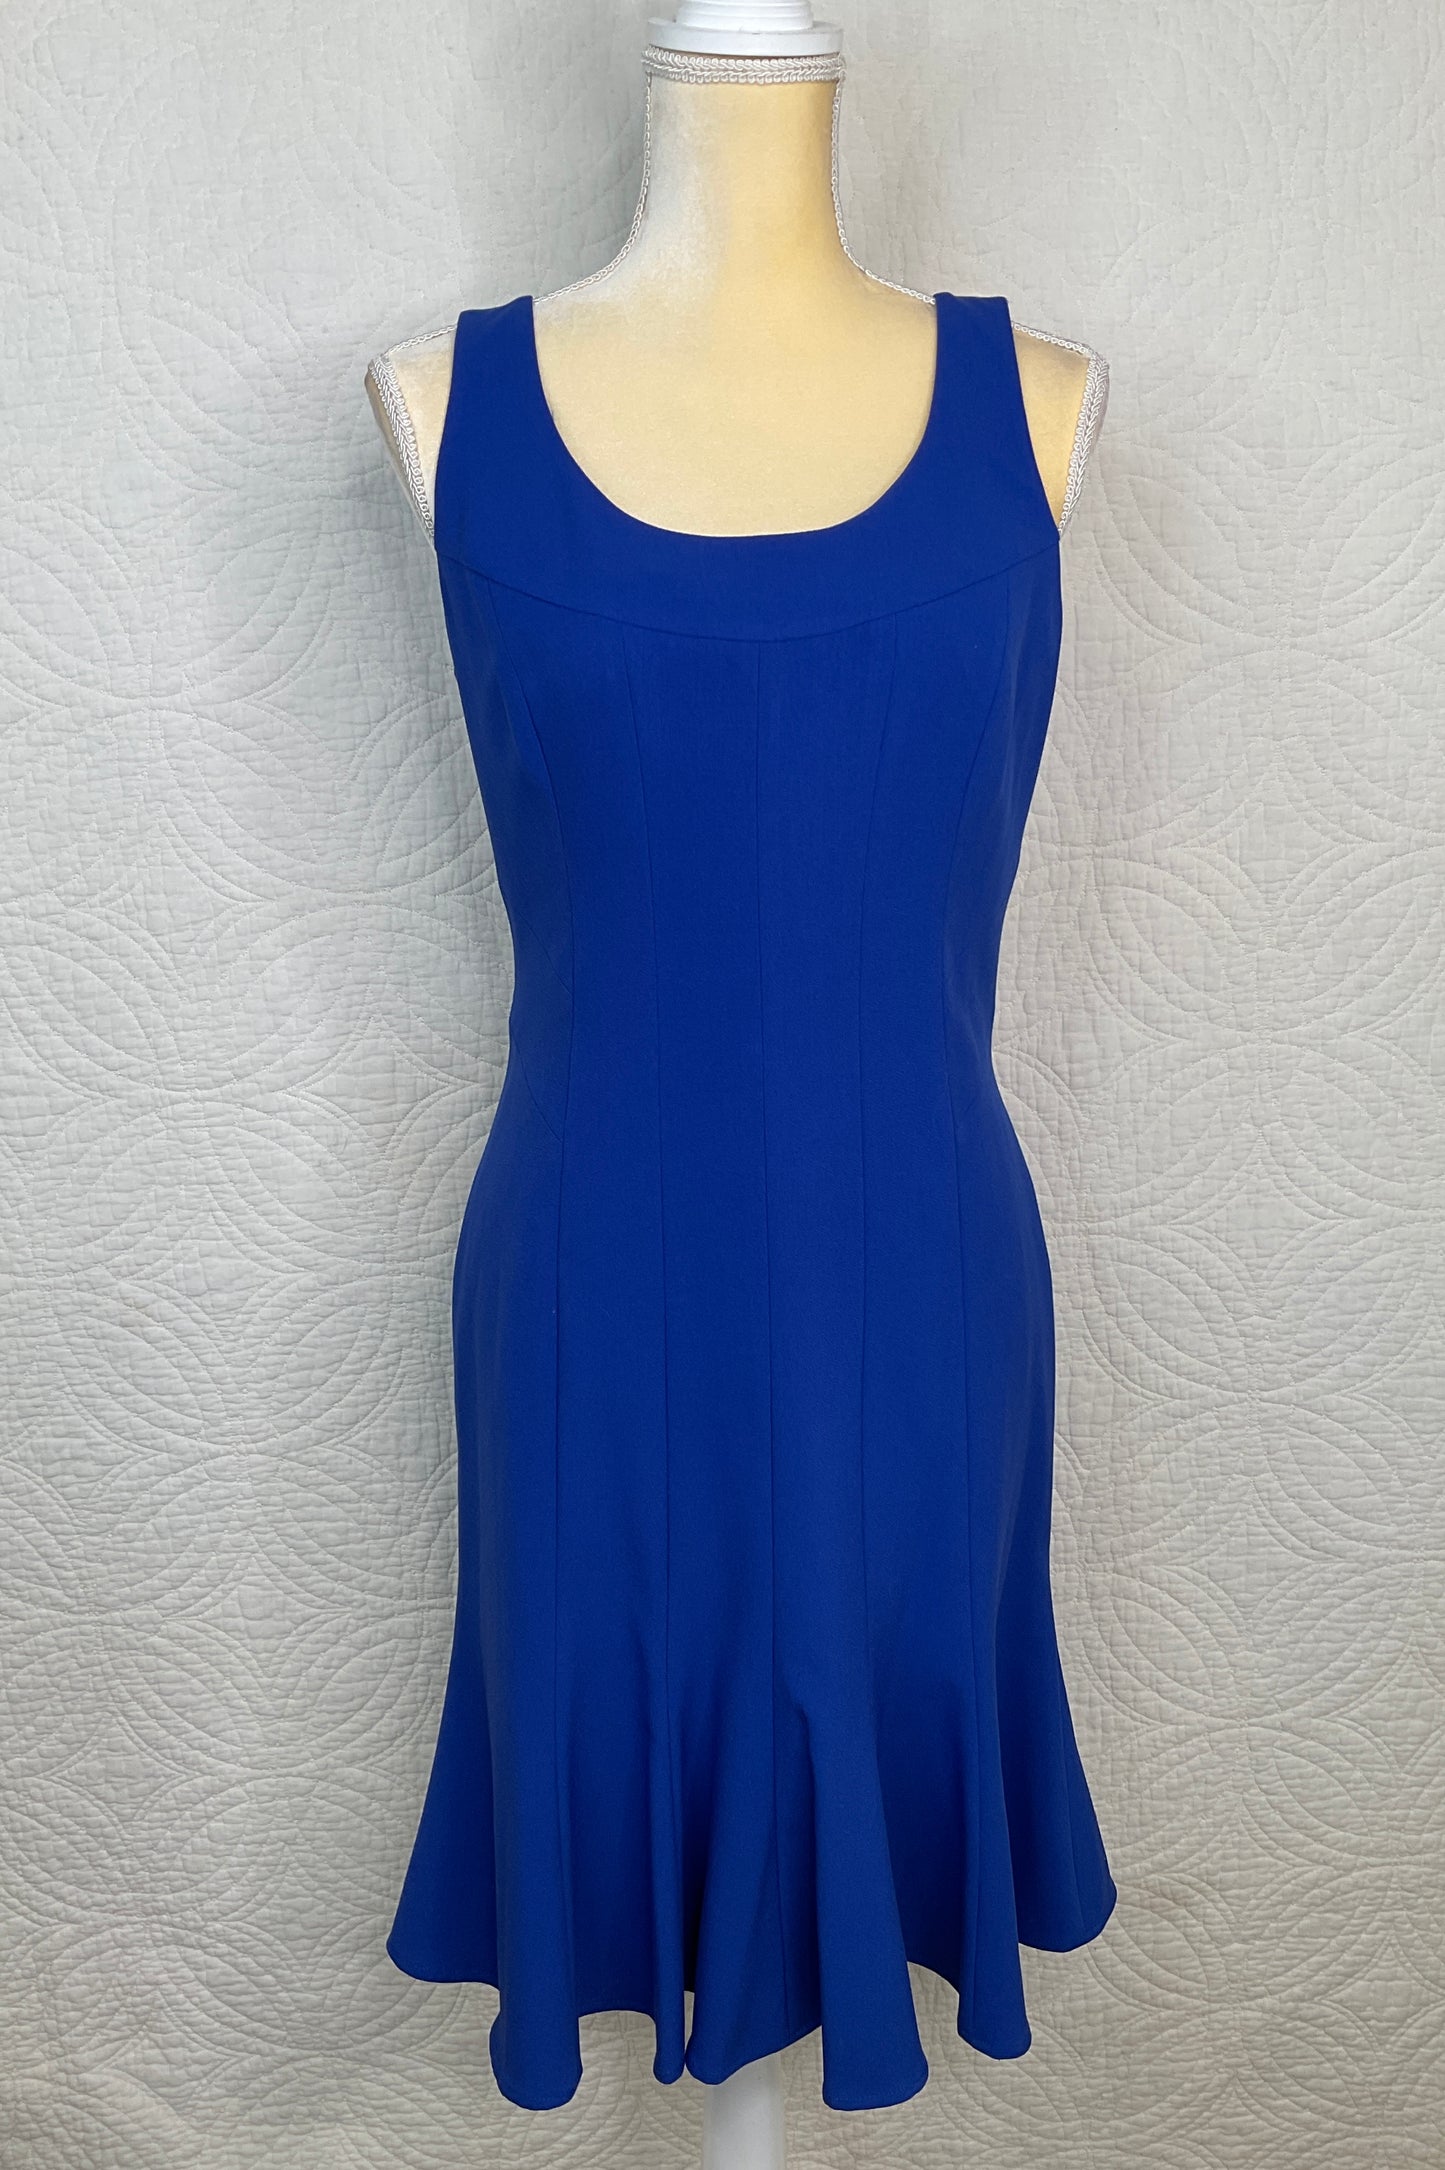 Calvin Klein Royal Blue Summer Dress, Size 6